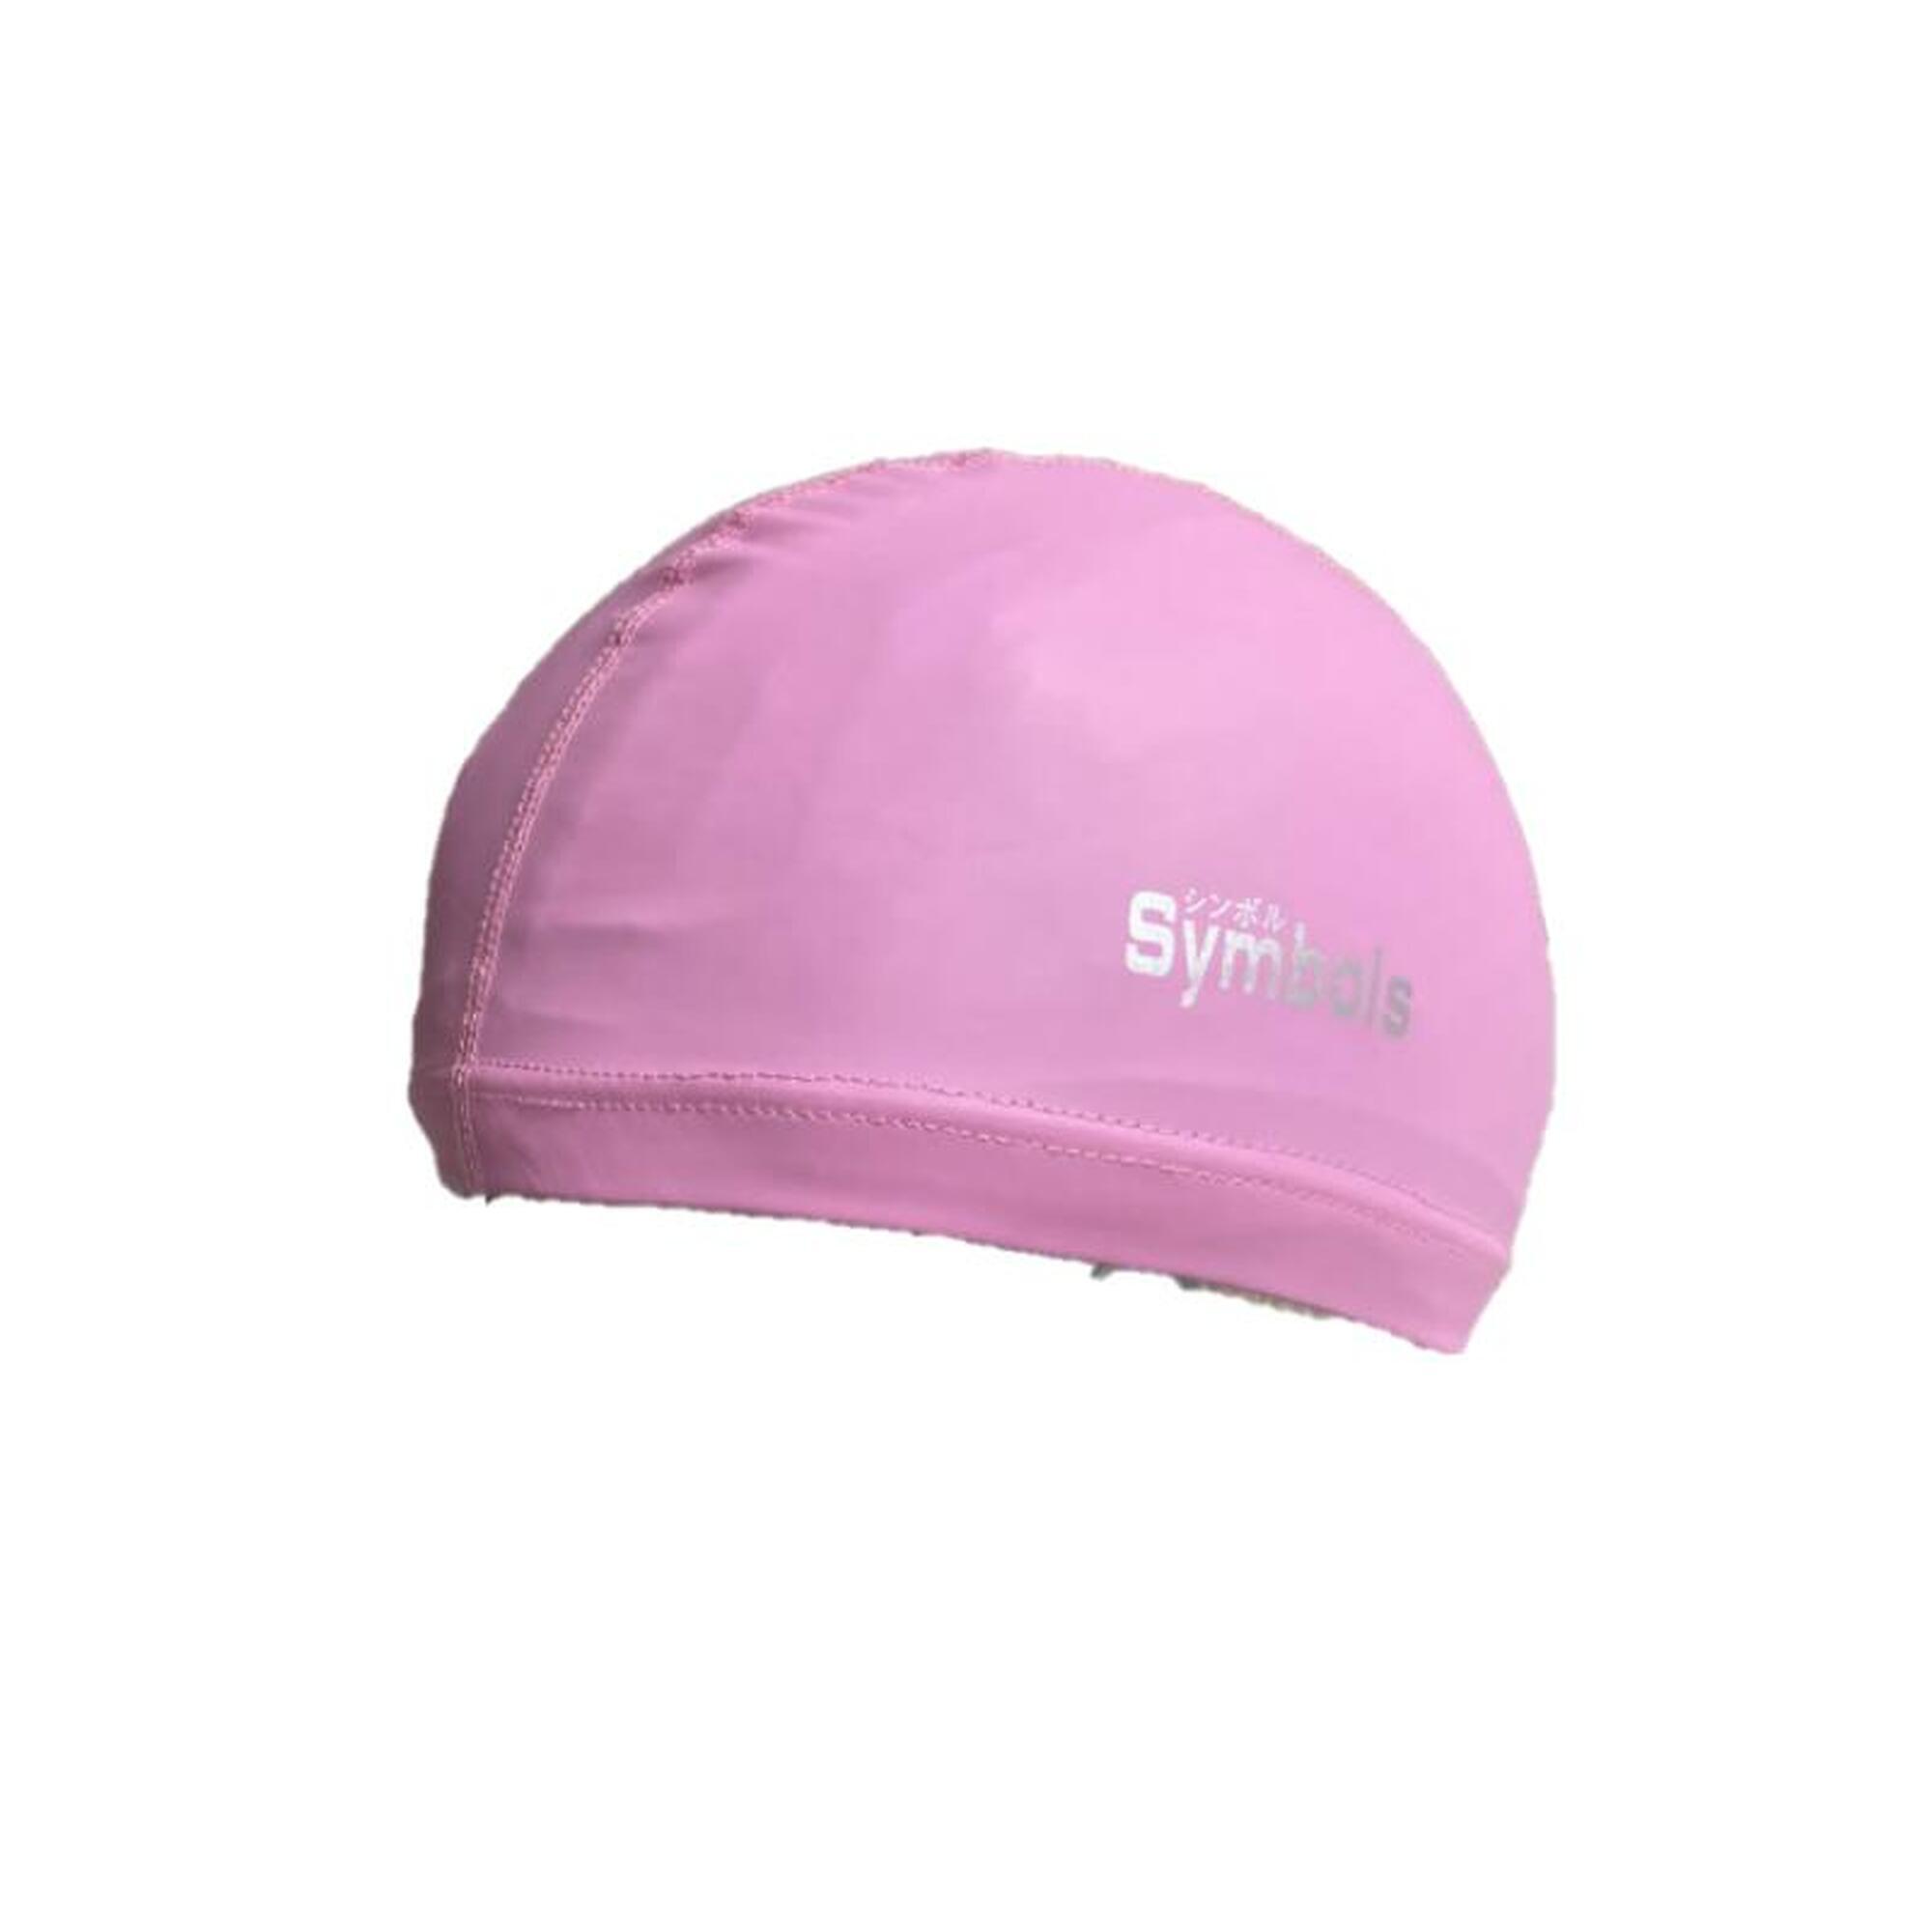 CAP002 Adult PU coated, comfortable Swimming Cap - Pink